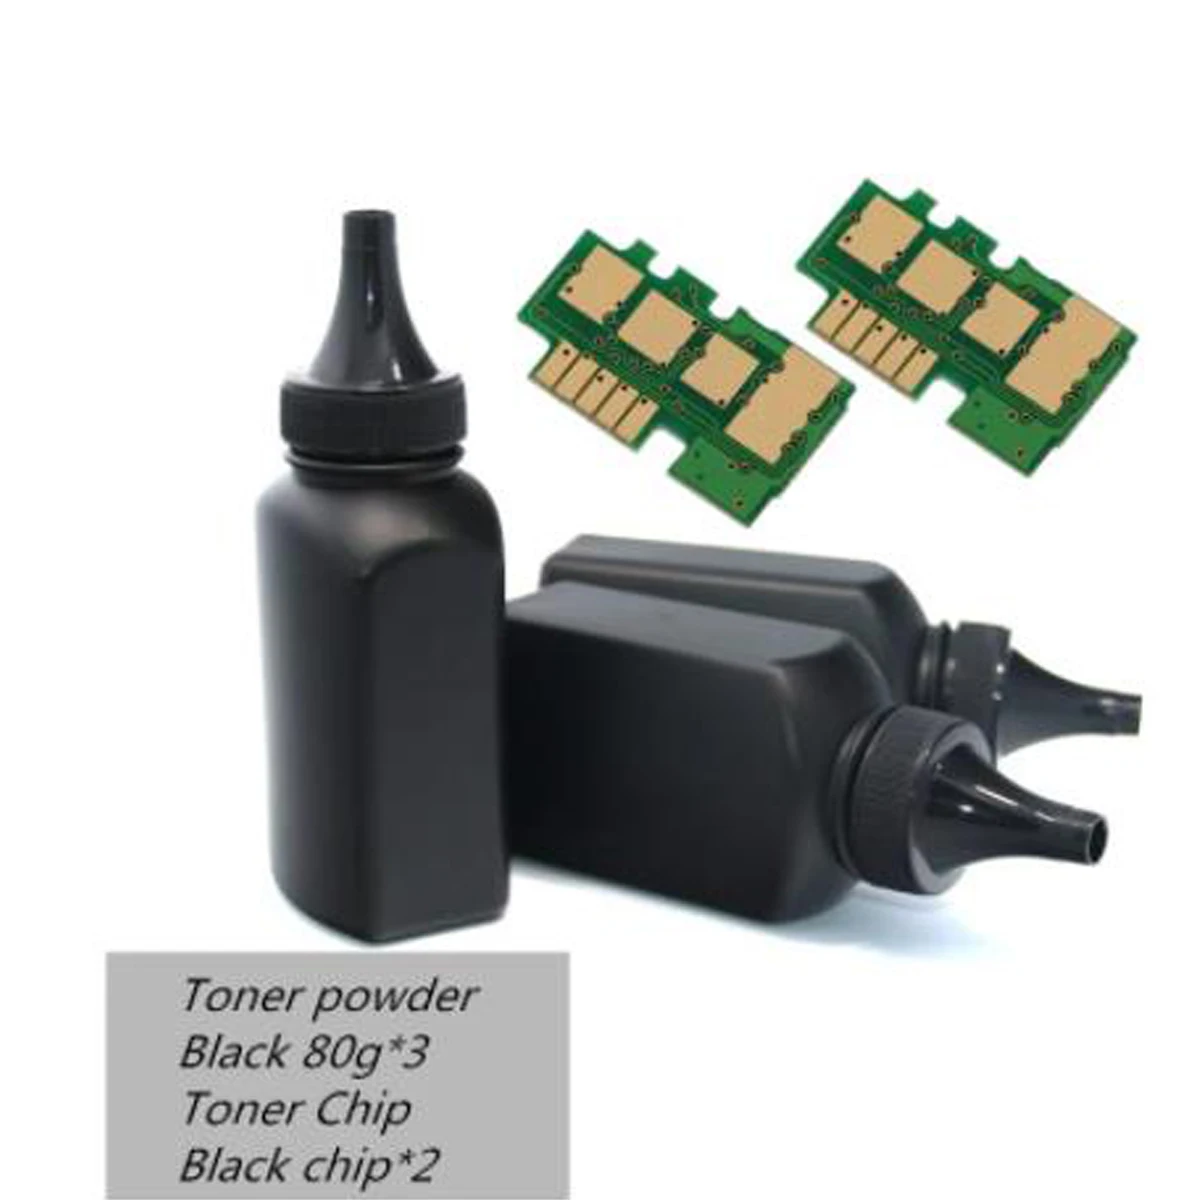 

MLT-D101S D101 toner powder and chips for Samsung ML 2160 2165 2168 SCX 3400 3405 3406 laser printer